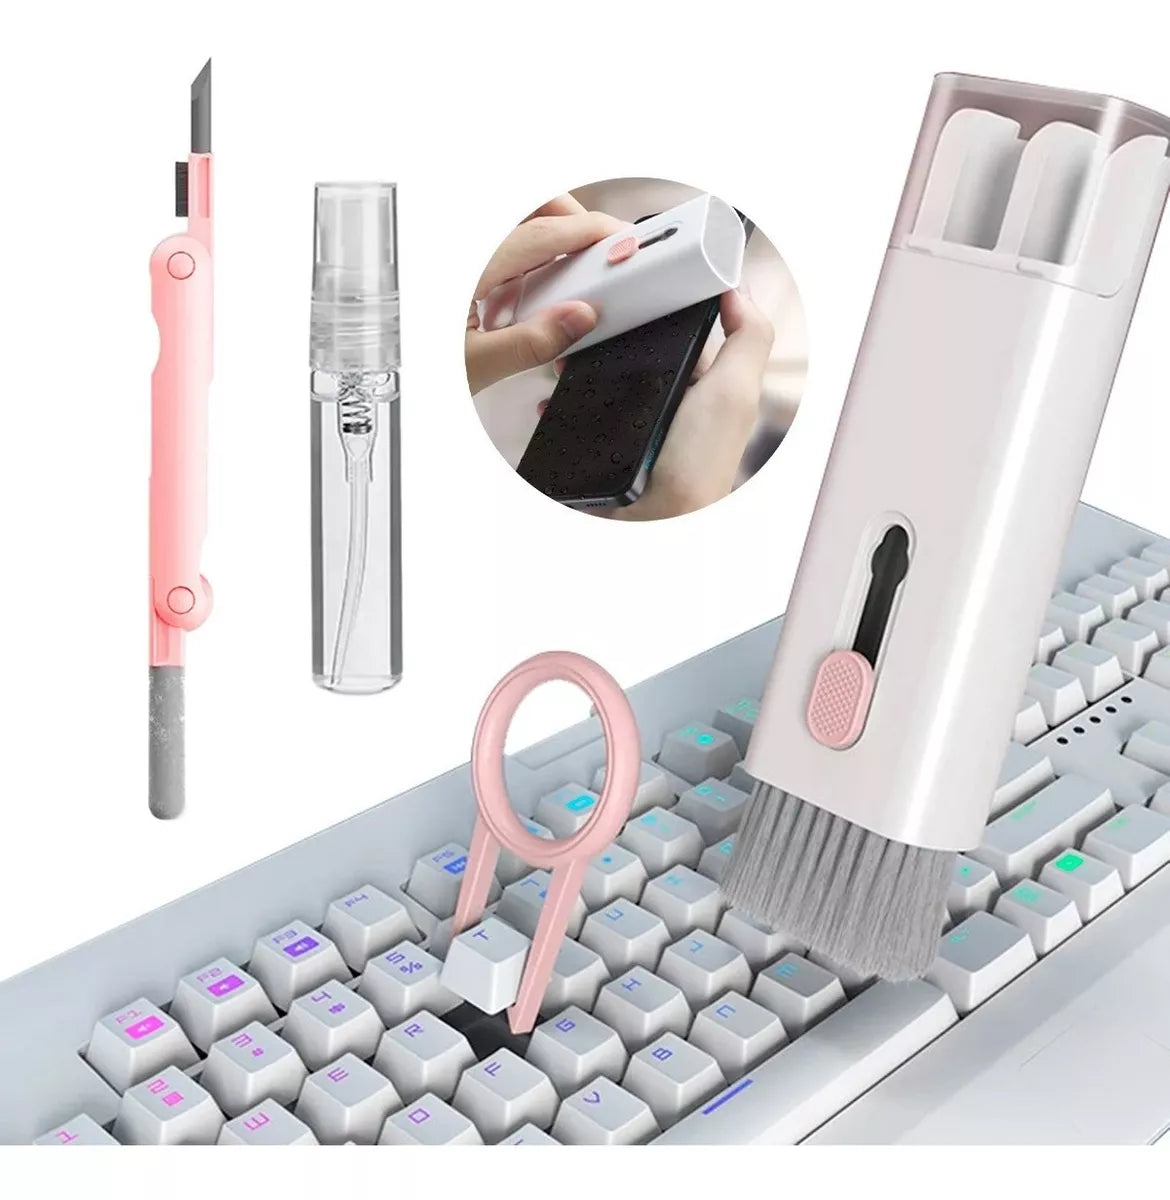 kit de escova de limpeza de teclado de computador fone de ouvido caneta para fone de ouvido